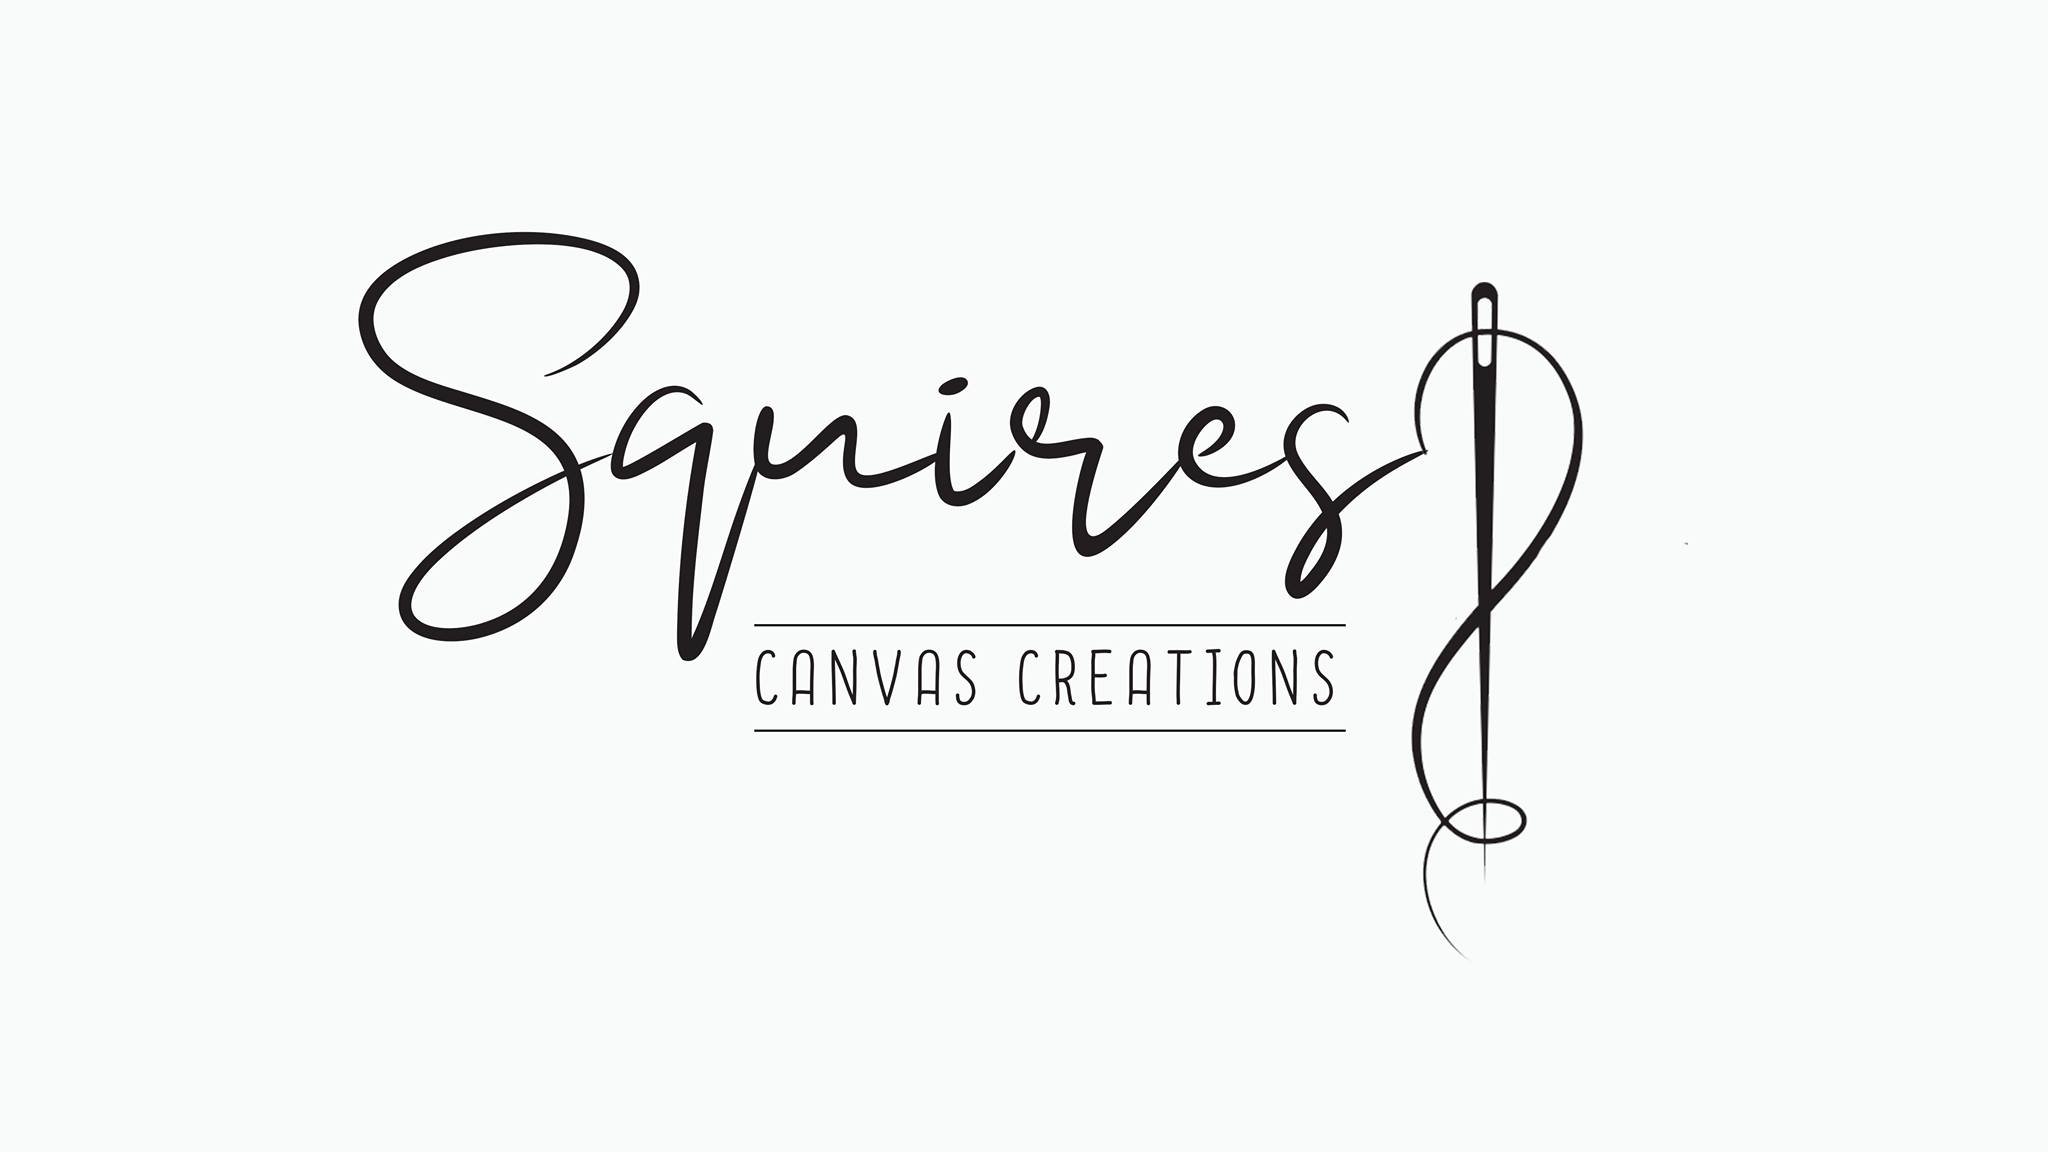 Squires Canvas Creations Logo.jpg